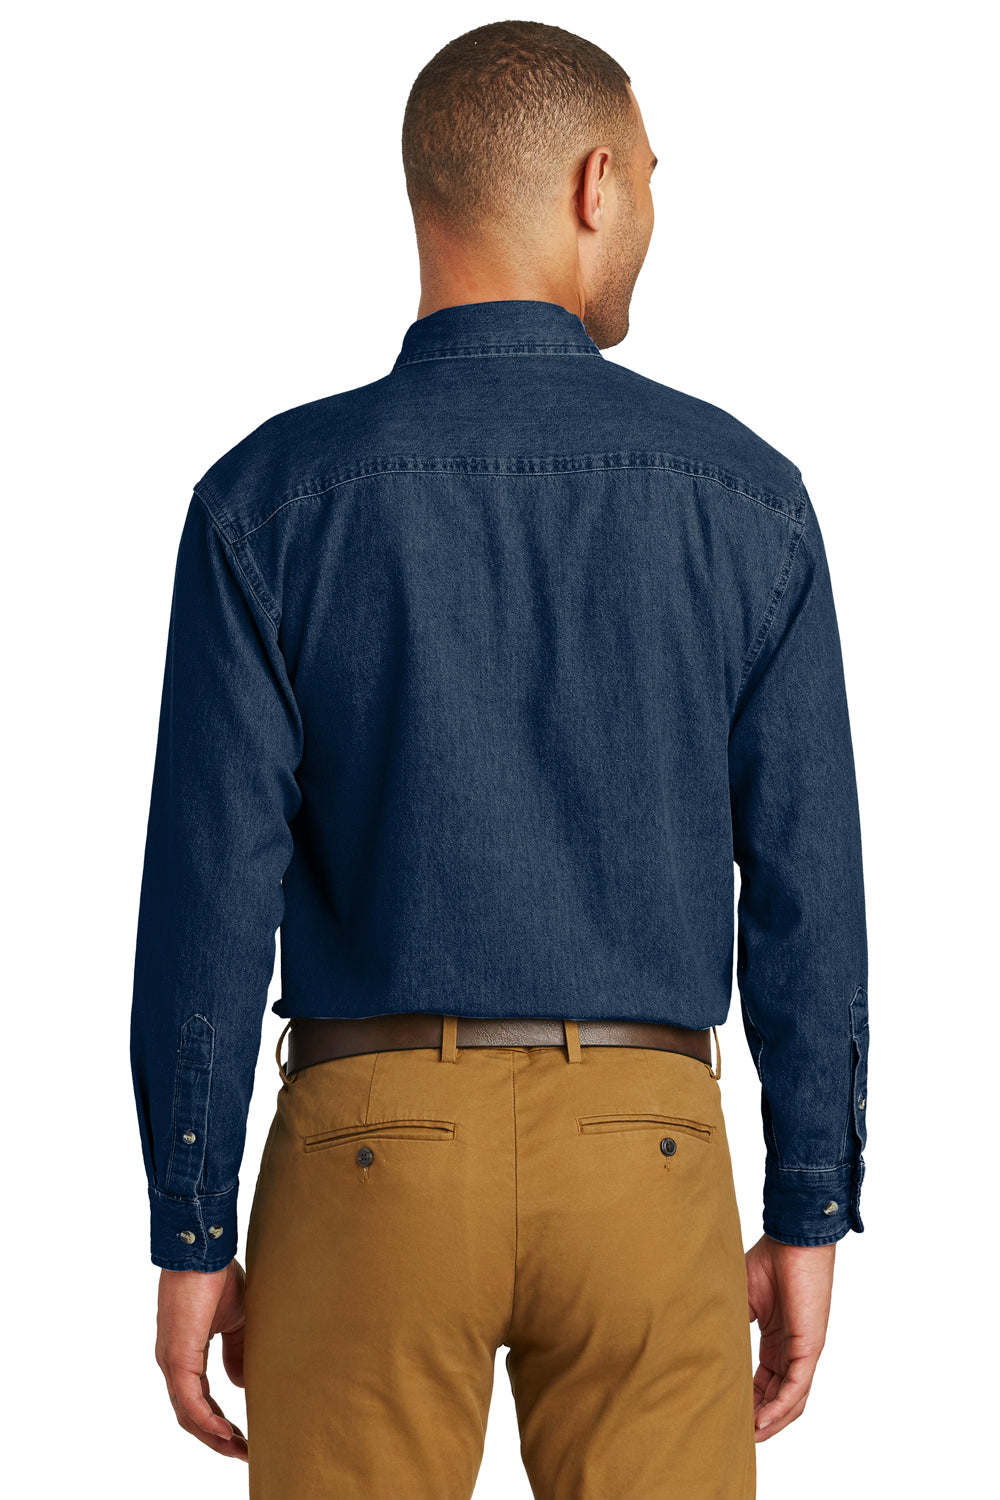 Port & Company SP10 Mens Denim Long Sleeve Button Down Shirt w/ Pocket Ink Blue Back